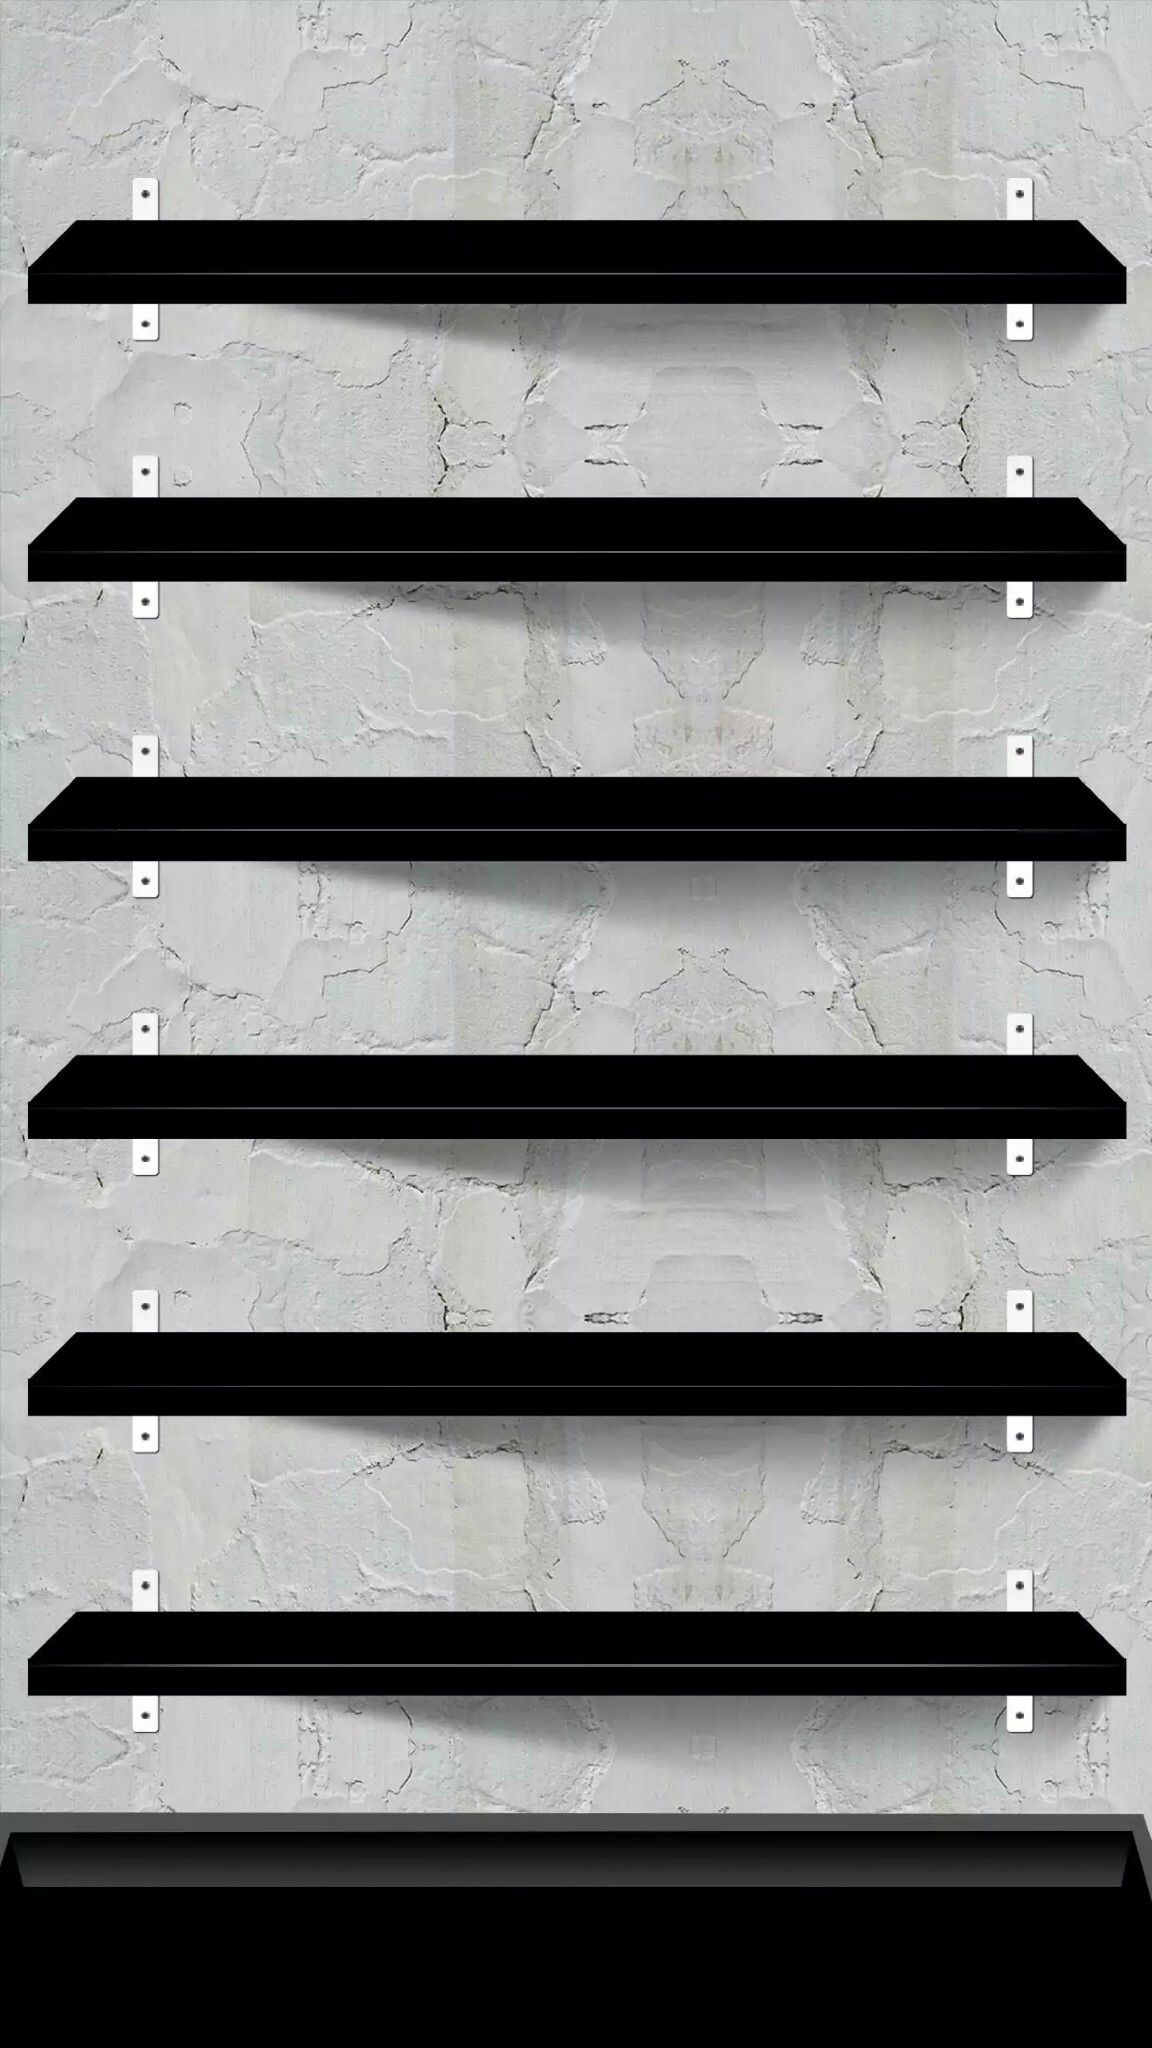 Black Shelf Wallpaper. iPhone 7 plus wallpaper, iPhone 6 plus wallpaper, iPhone homescreen wallpaper